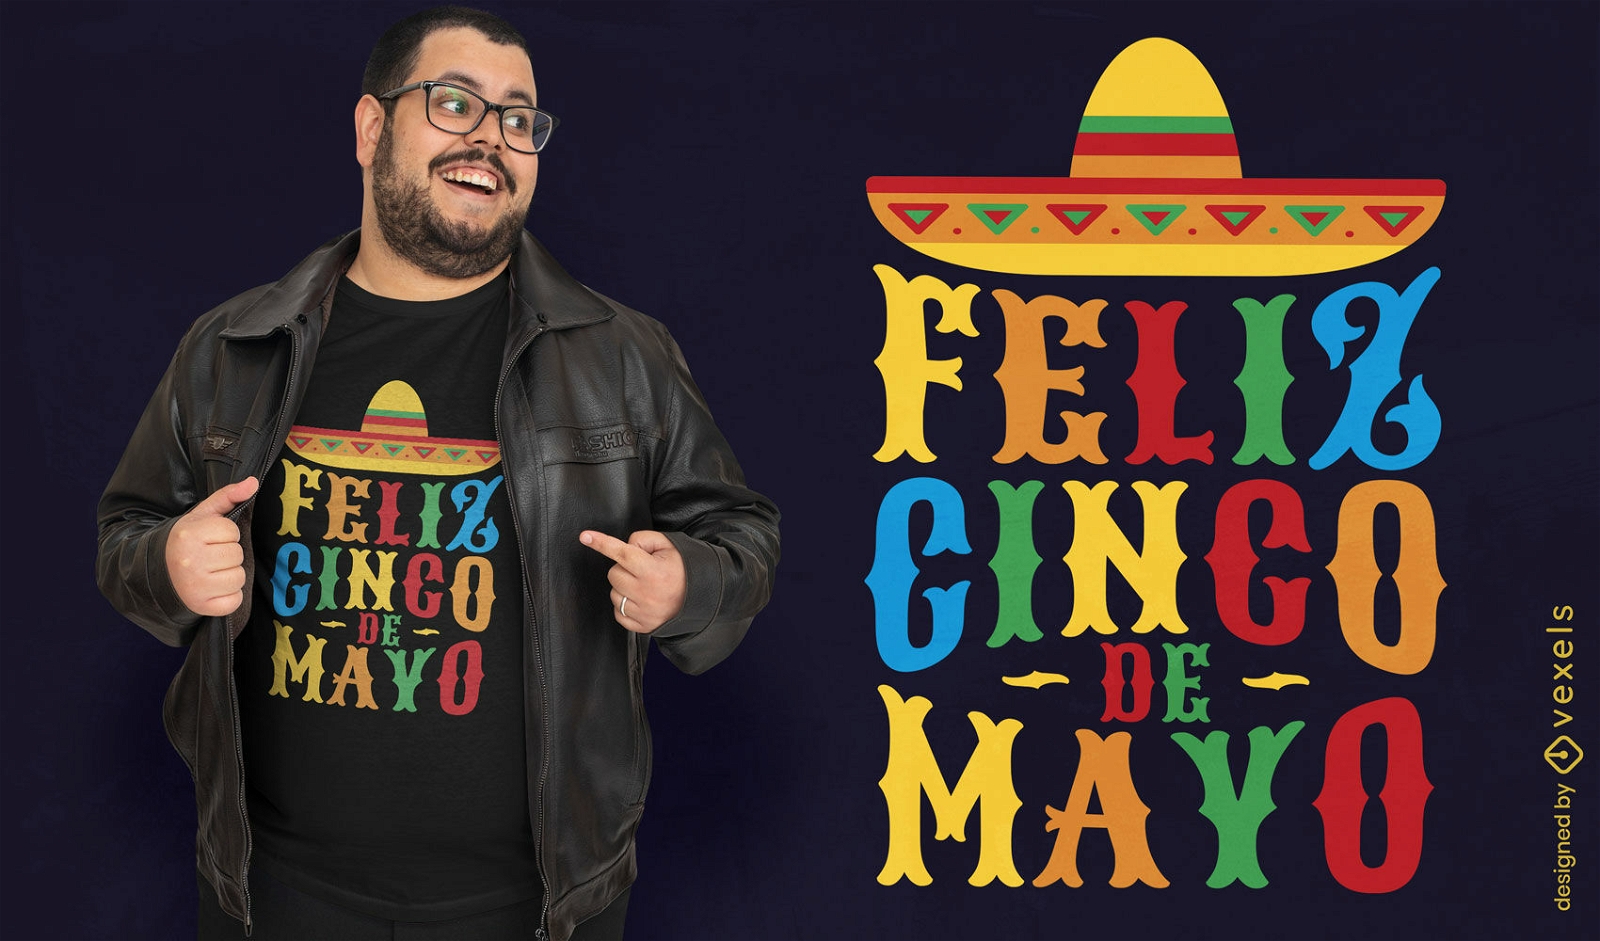 Cinco de mayo mexican holiday t-shirt design